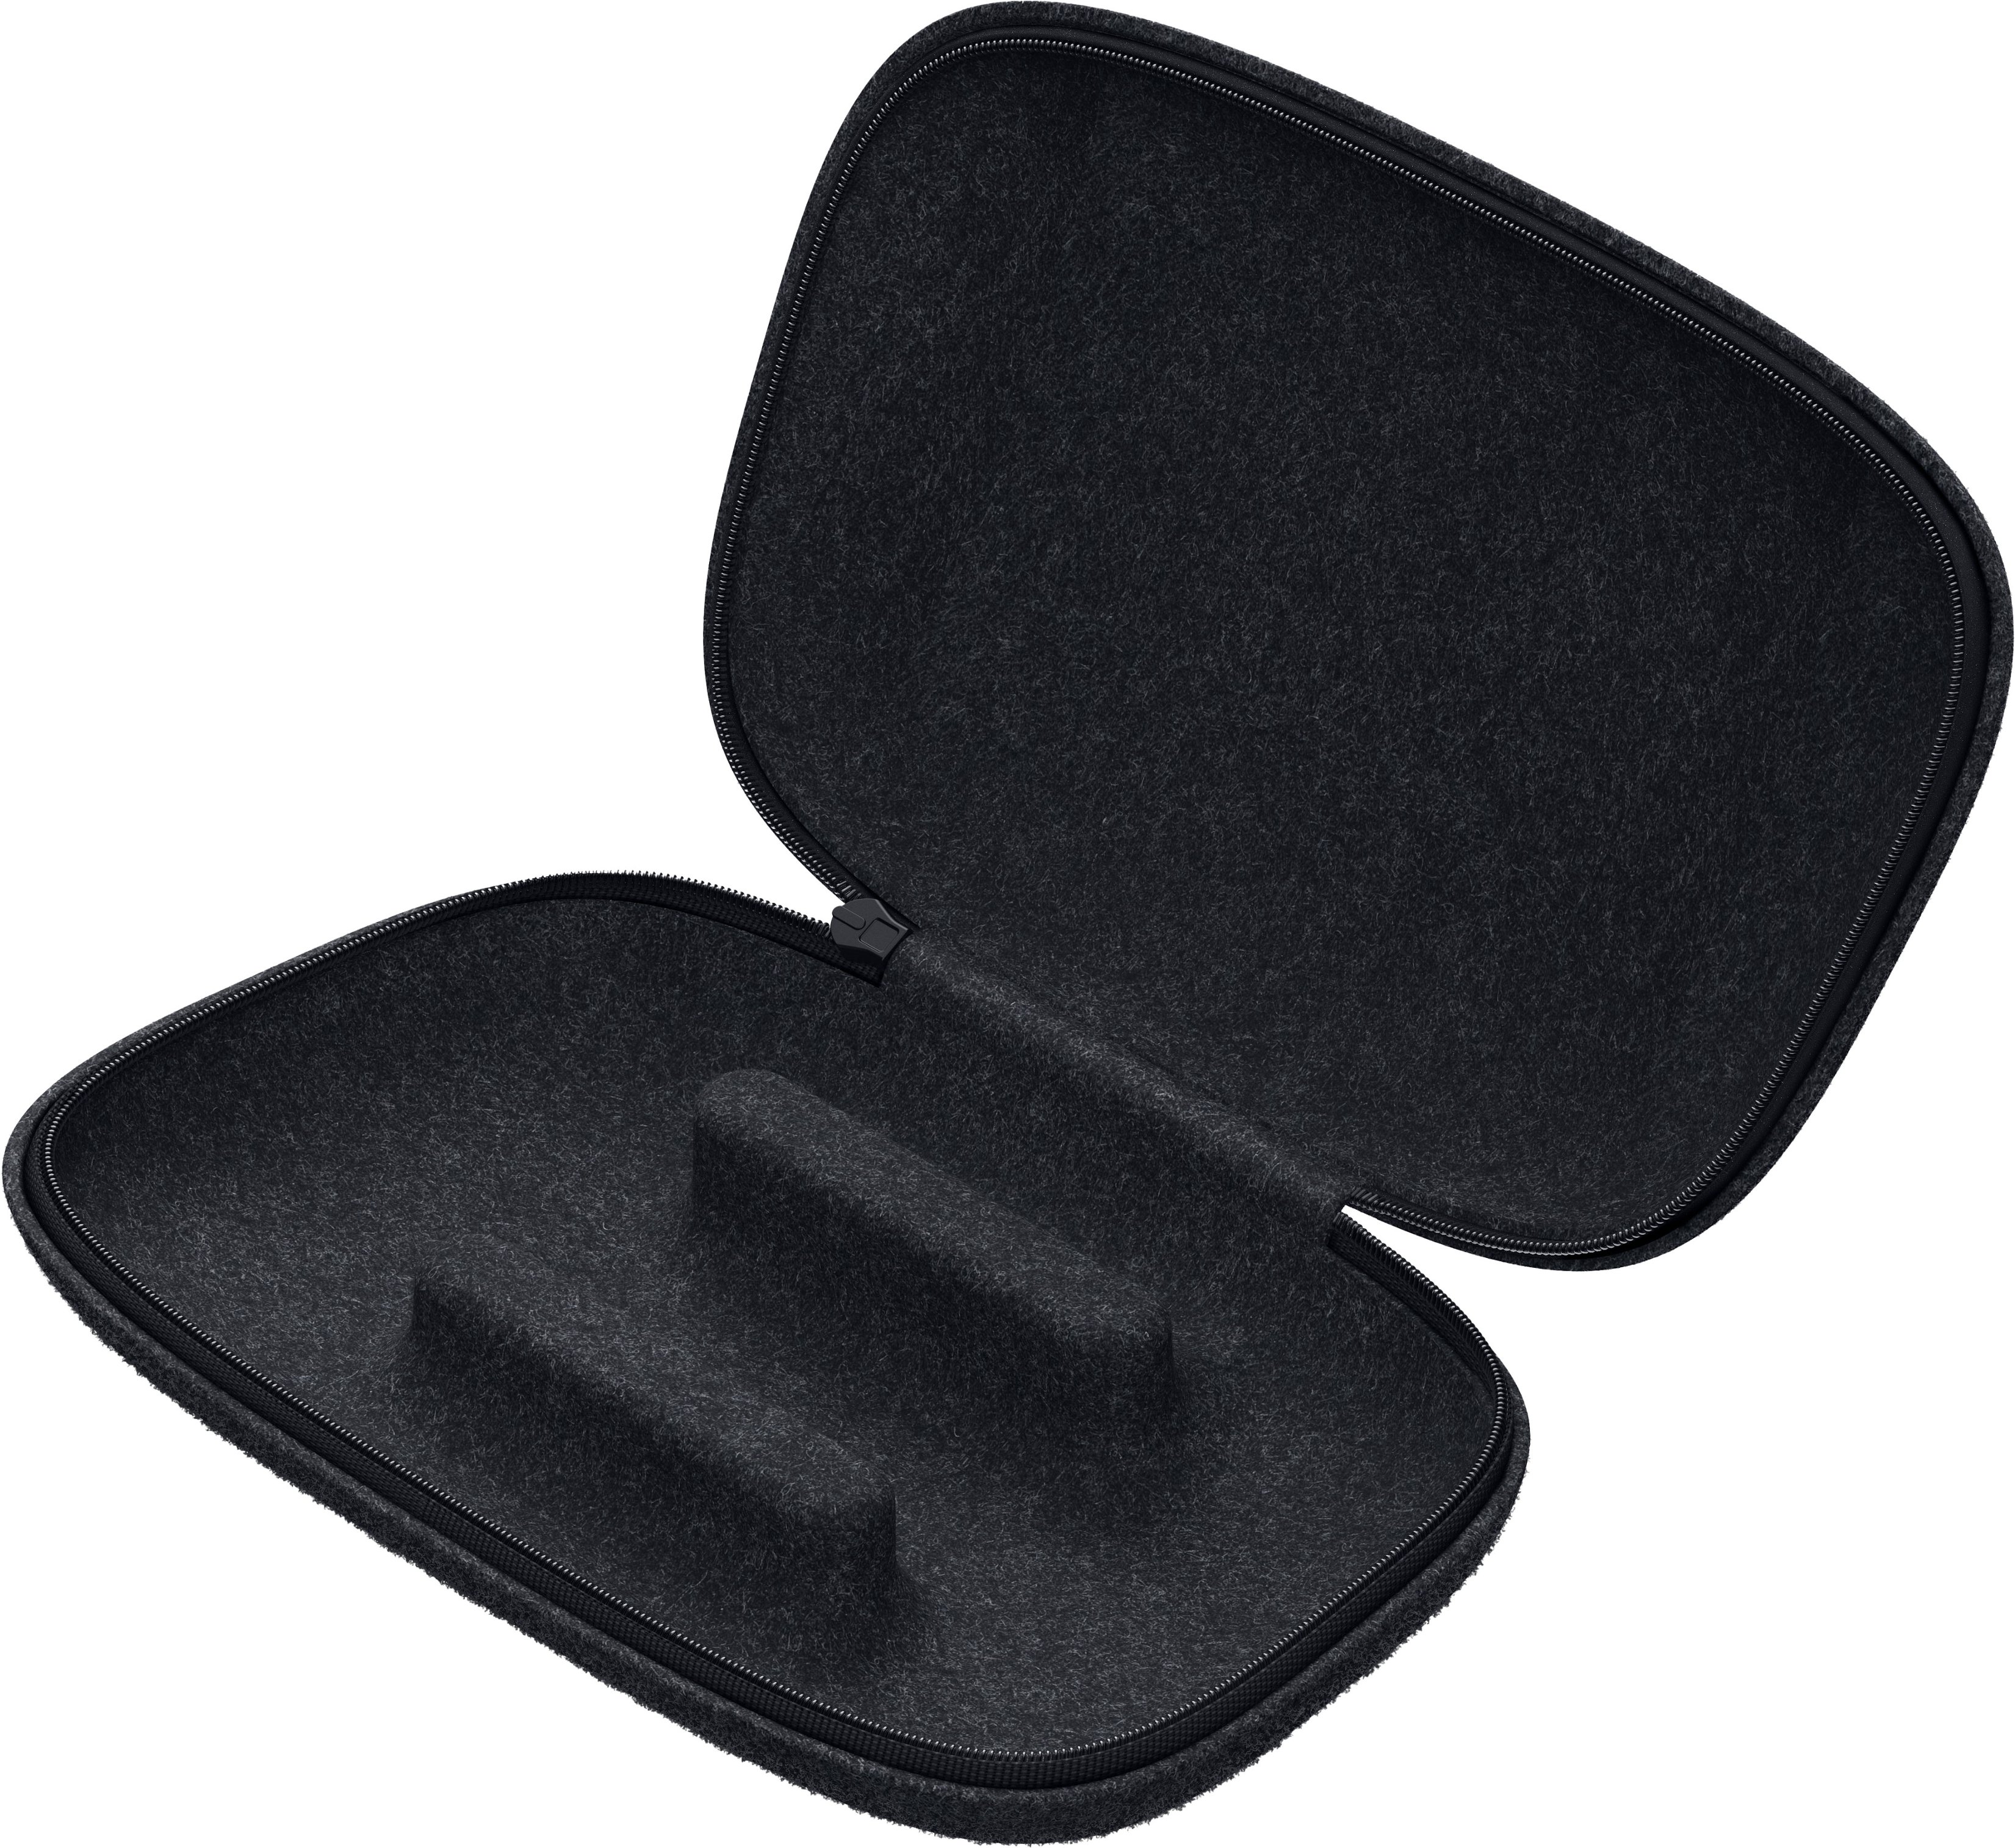 Backbone One Carrying Case Black CC-01-B-R - Best Buy